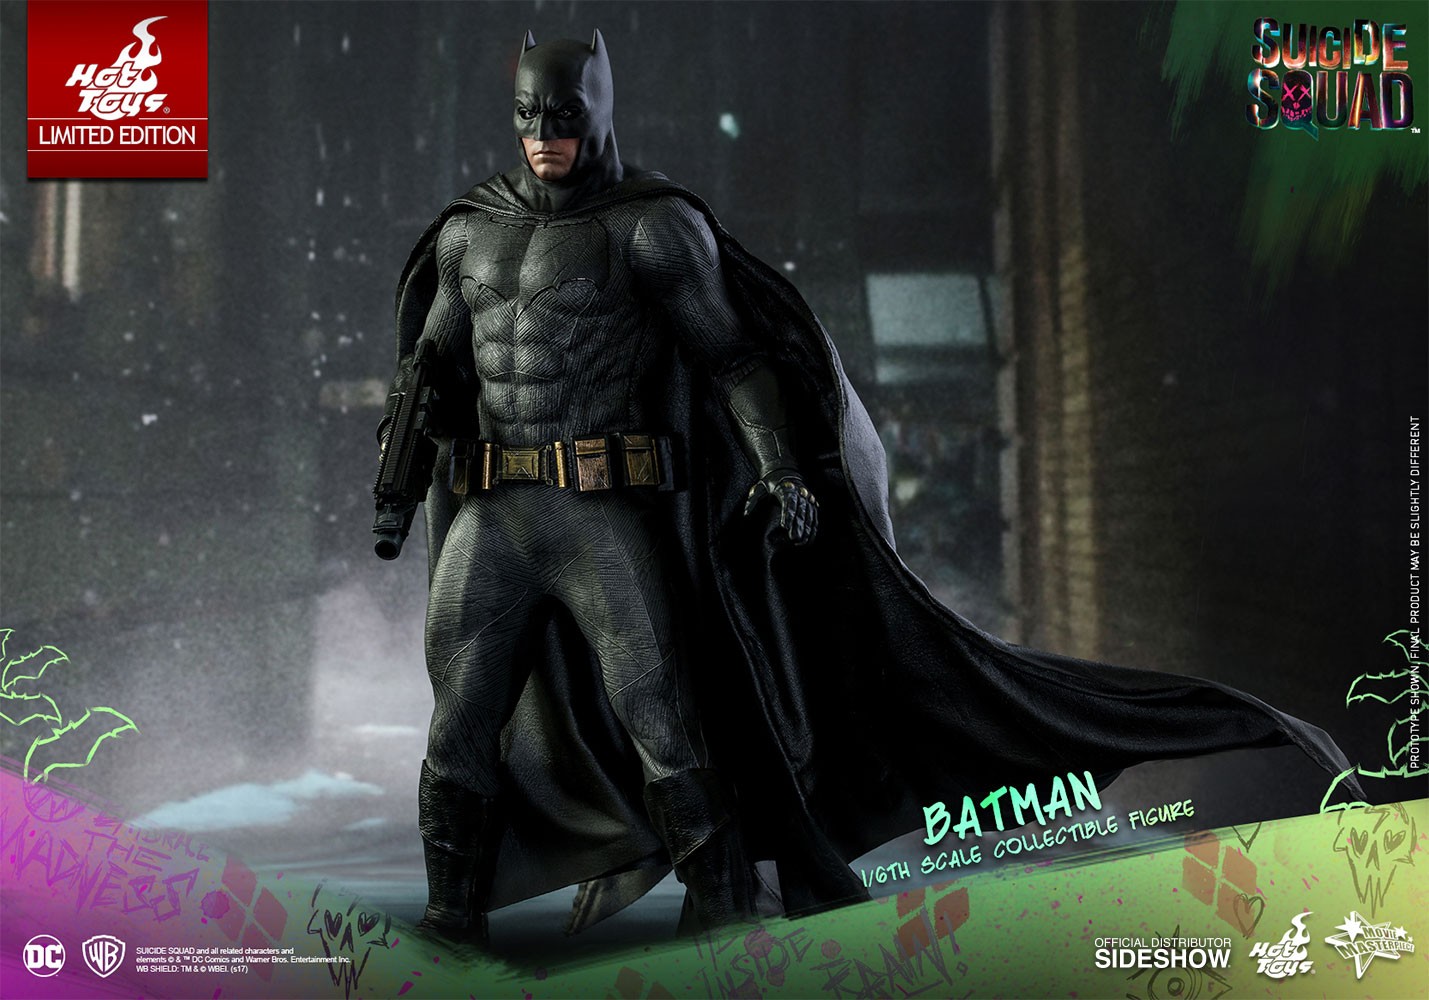 Batman Exclusive Edition (Prototype Shown) View 12